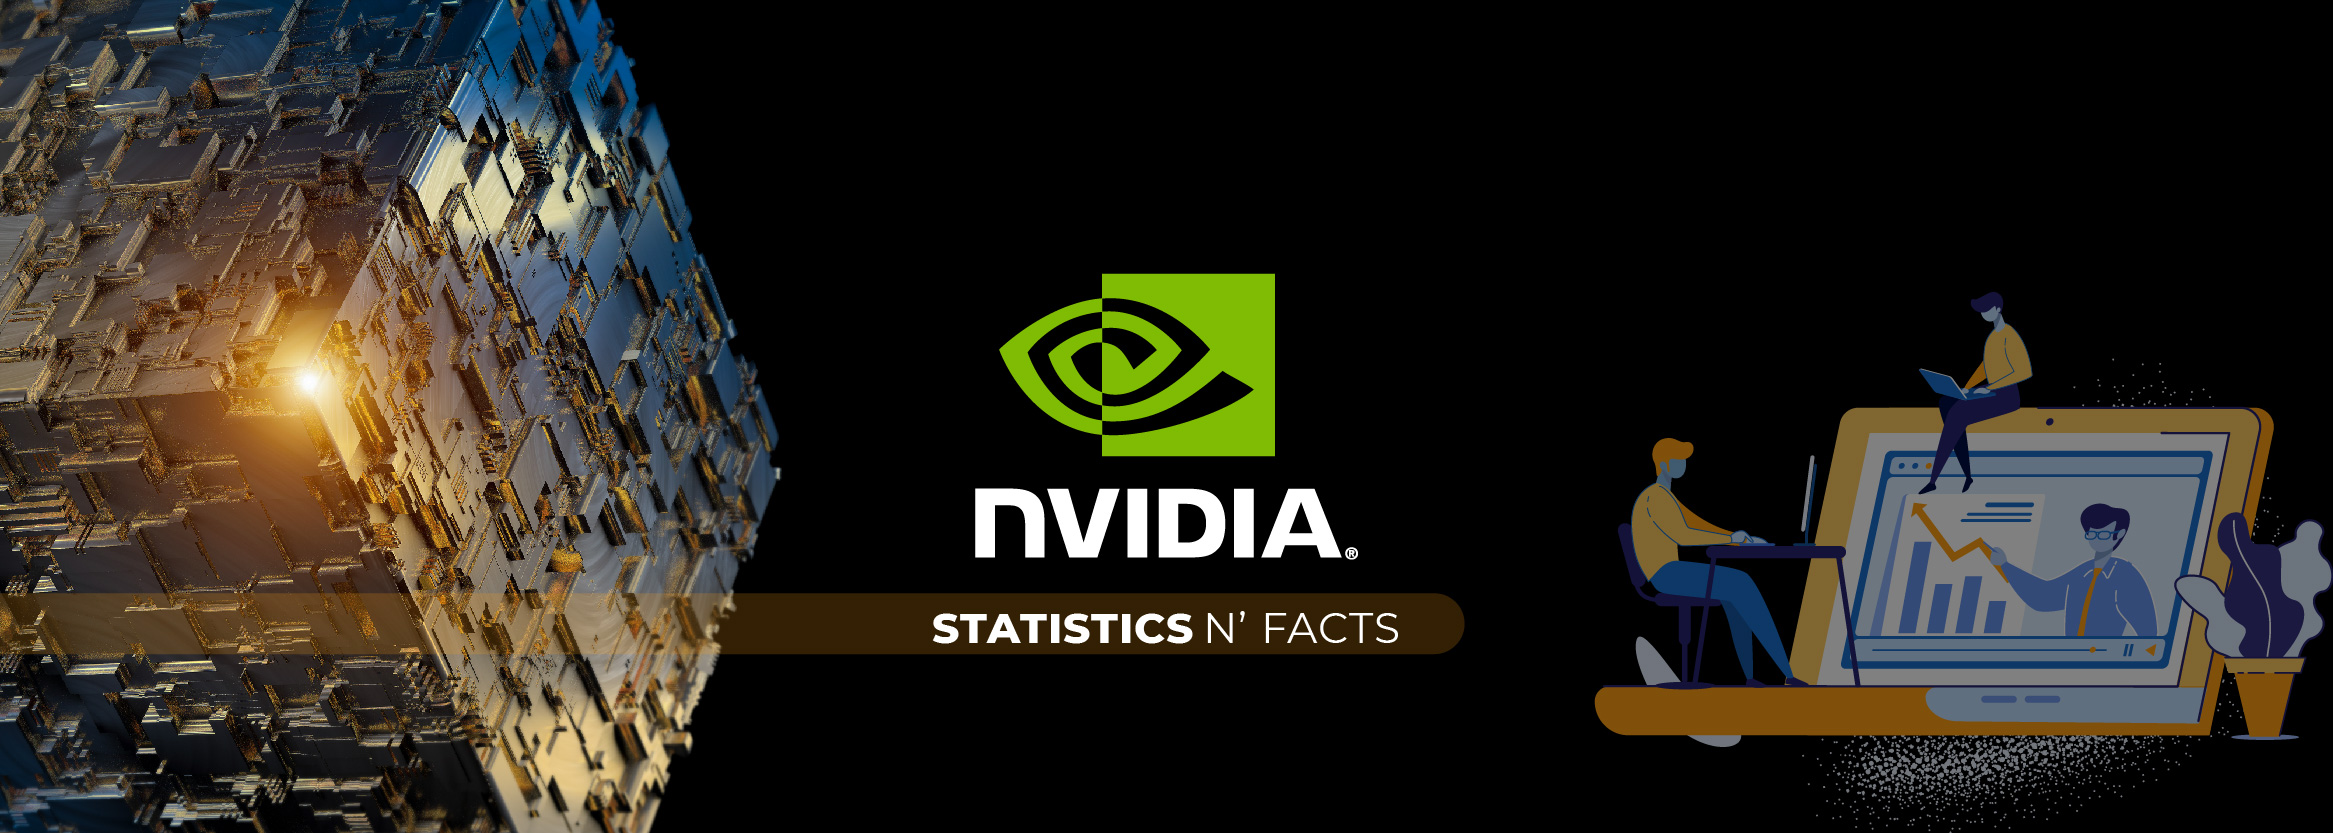 Nvidia Statistics